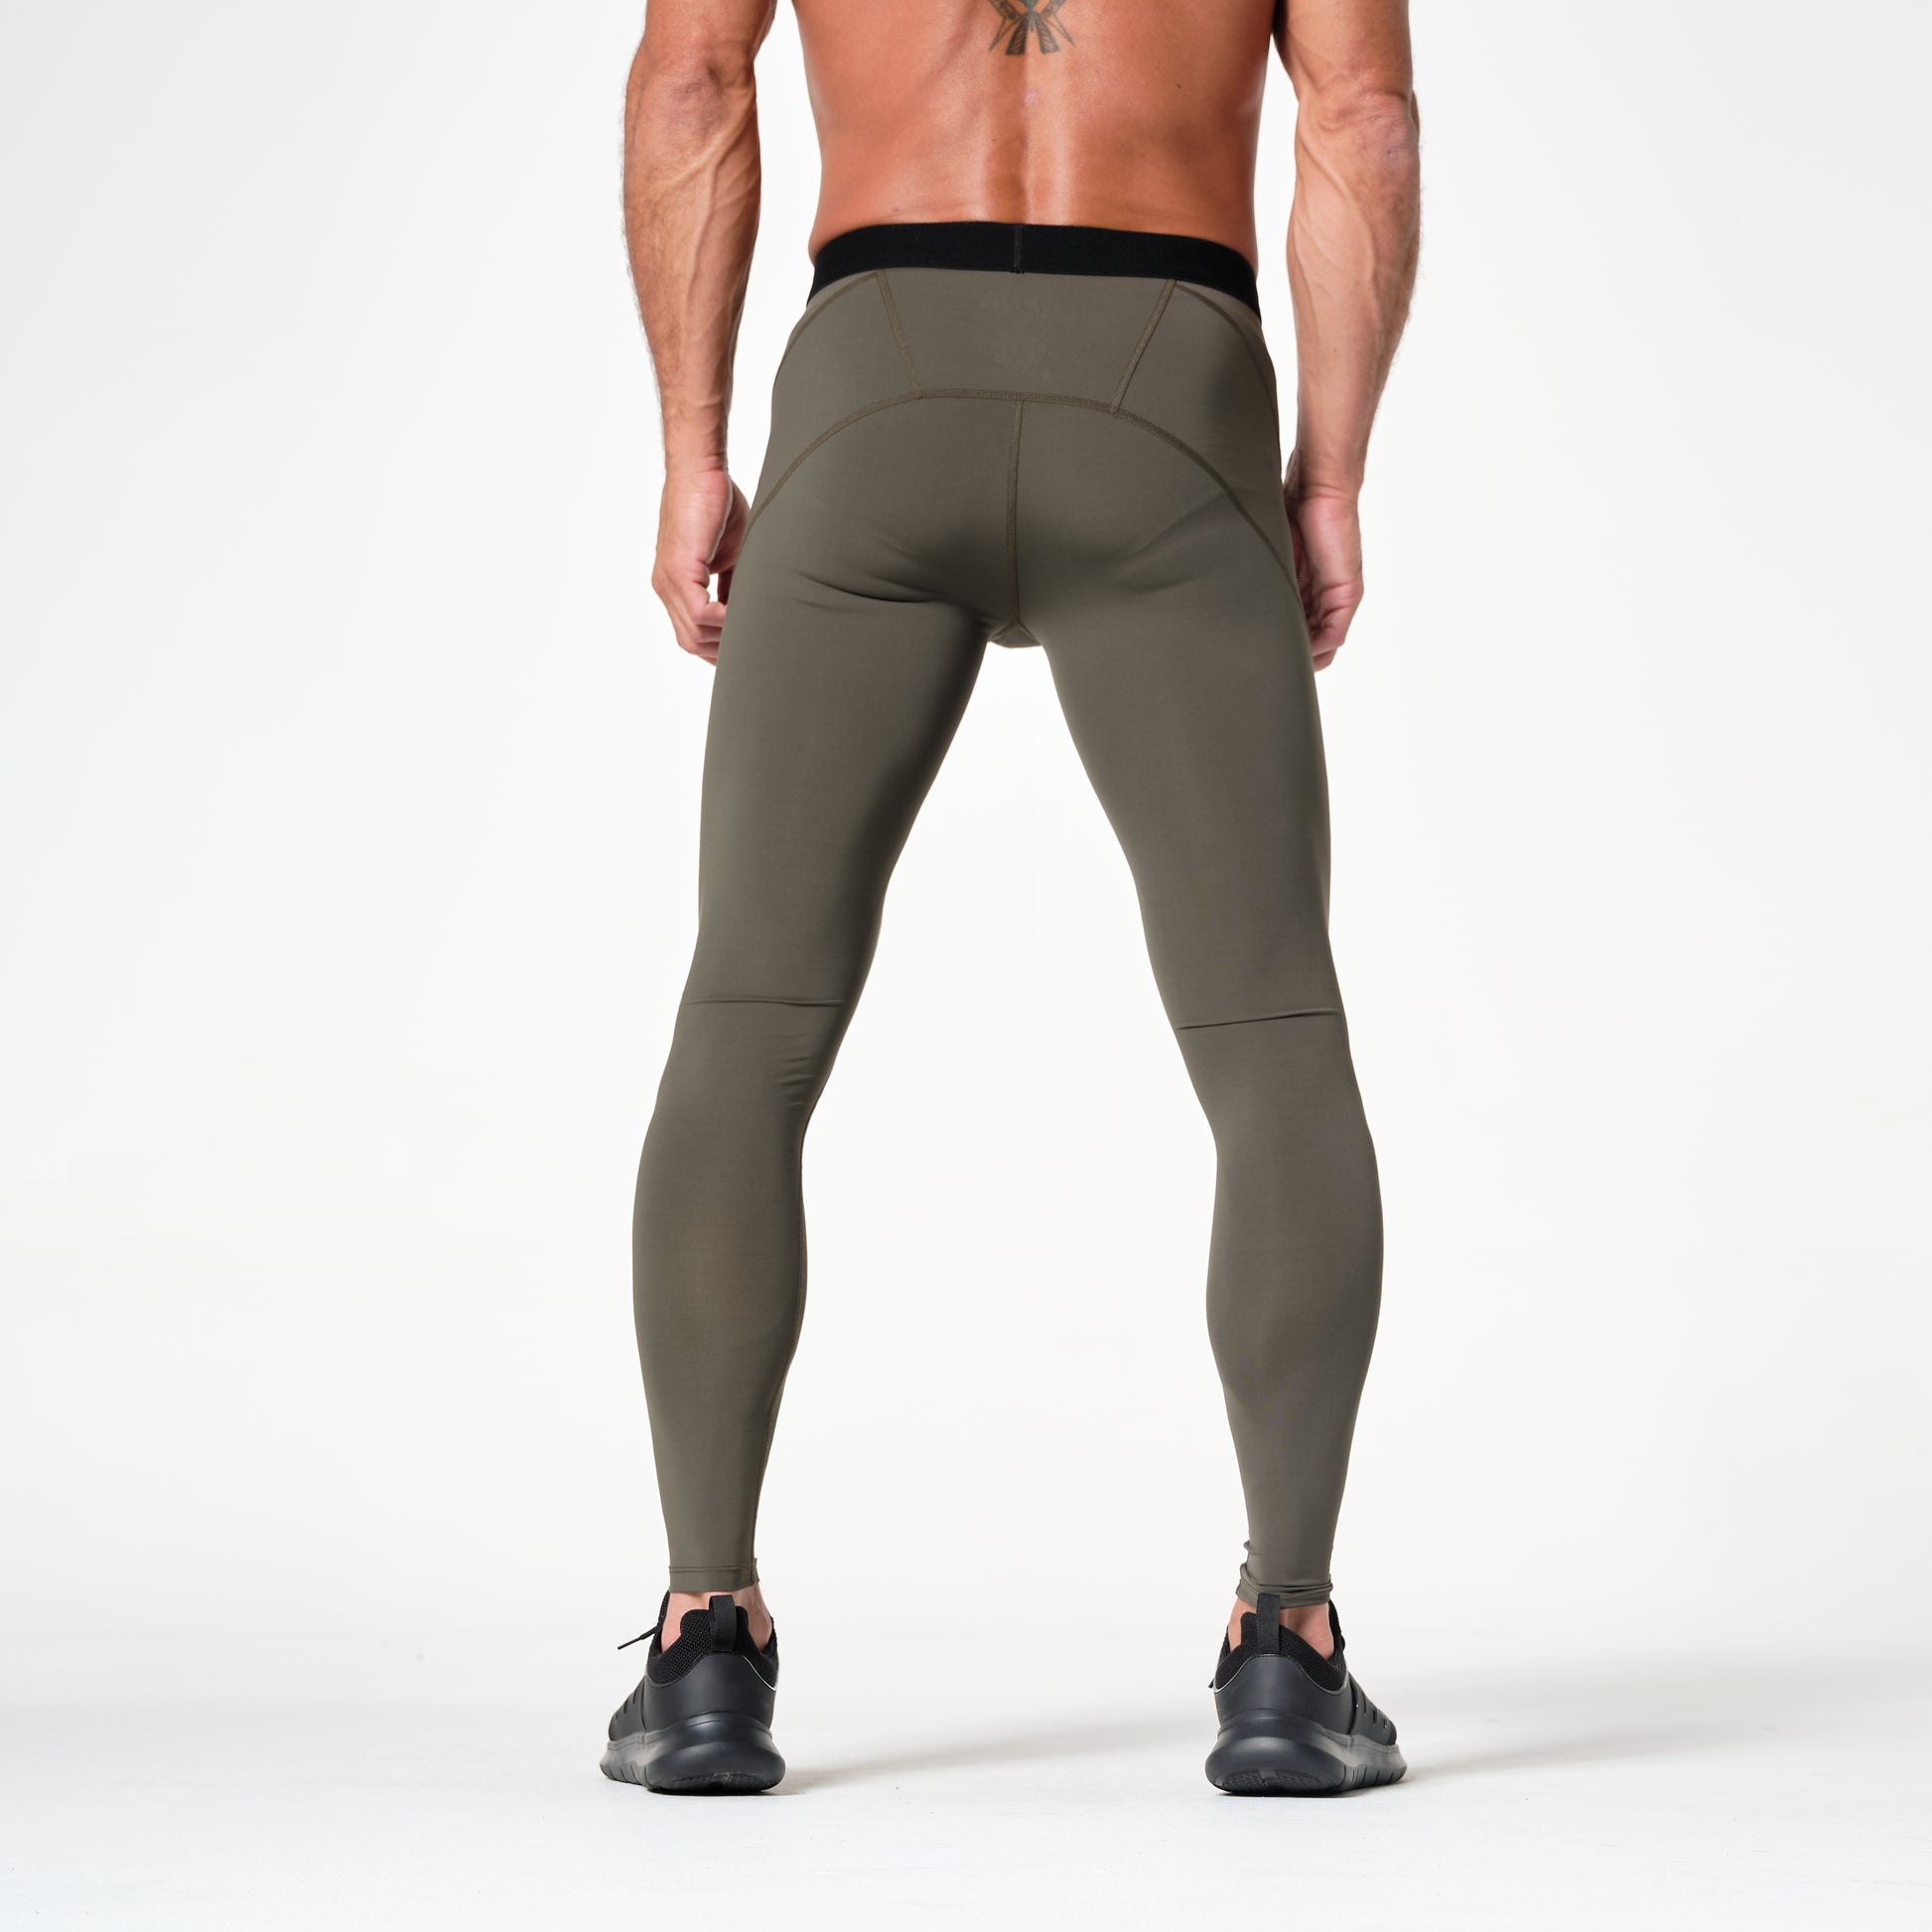 PLUS SIZE Compression Gym Pants for Men / Gym / Yoga & Stretch